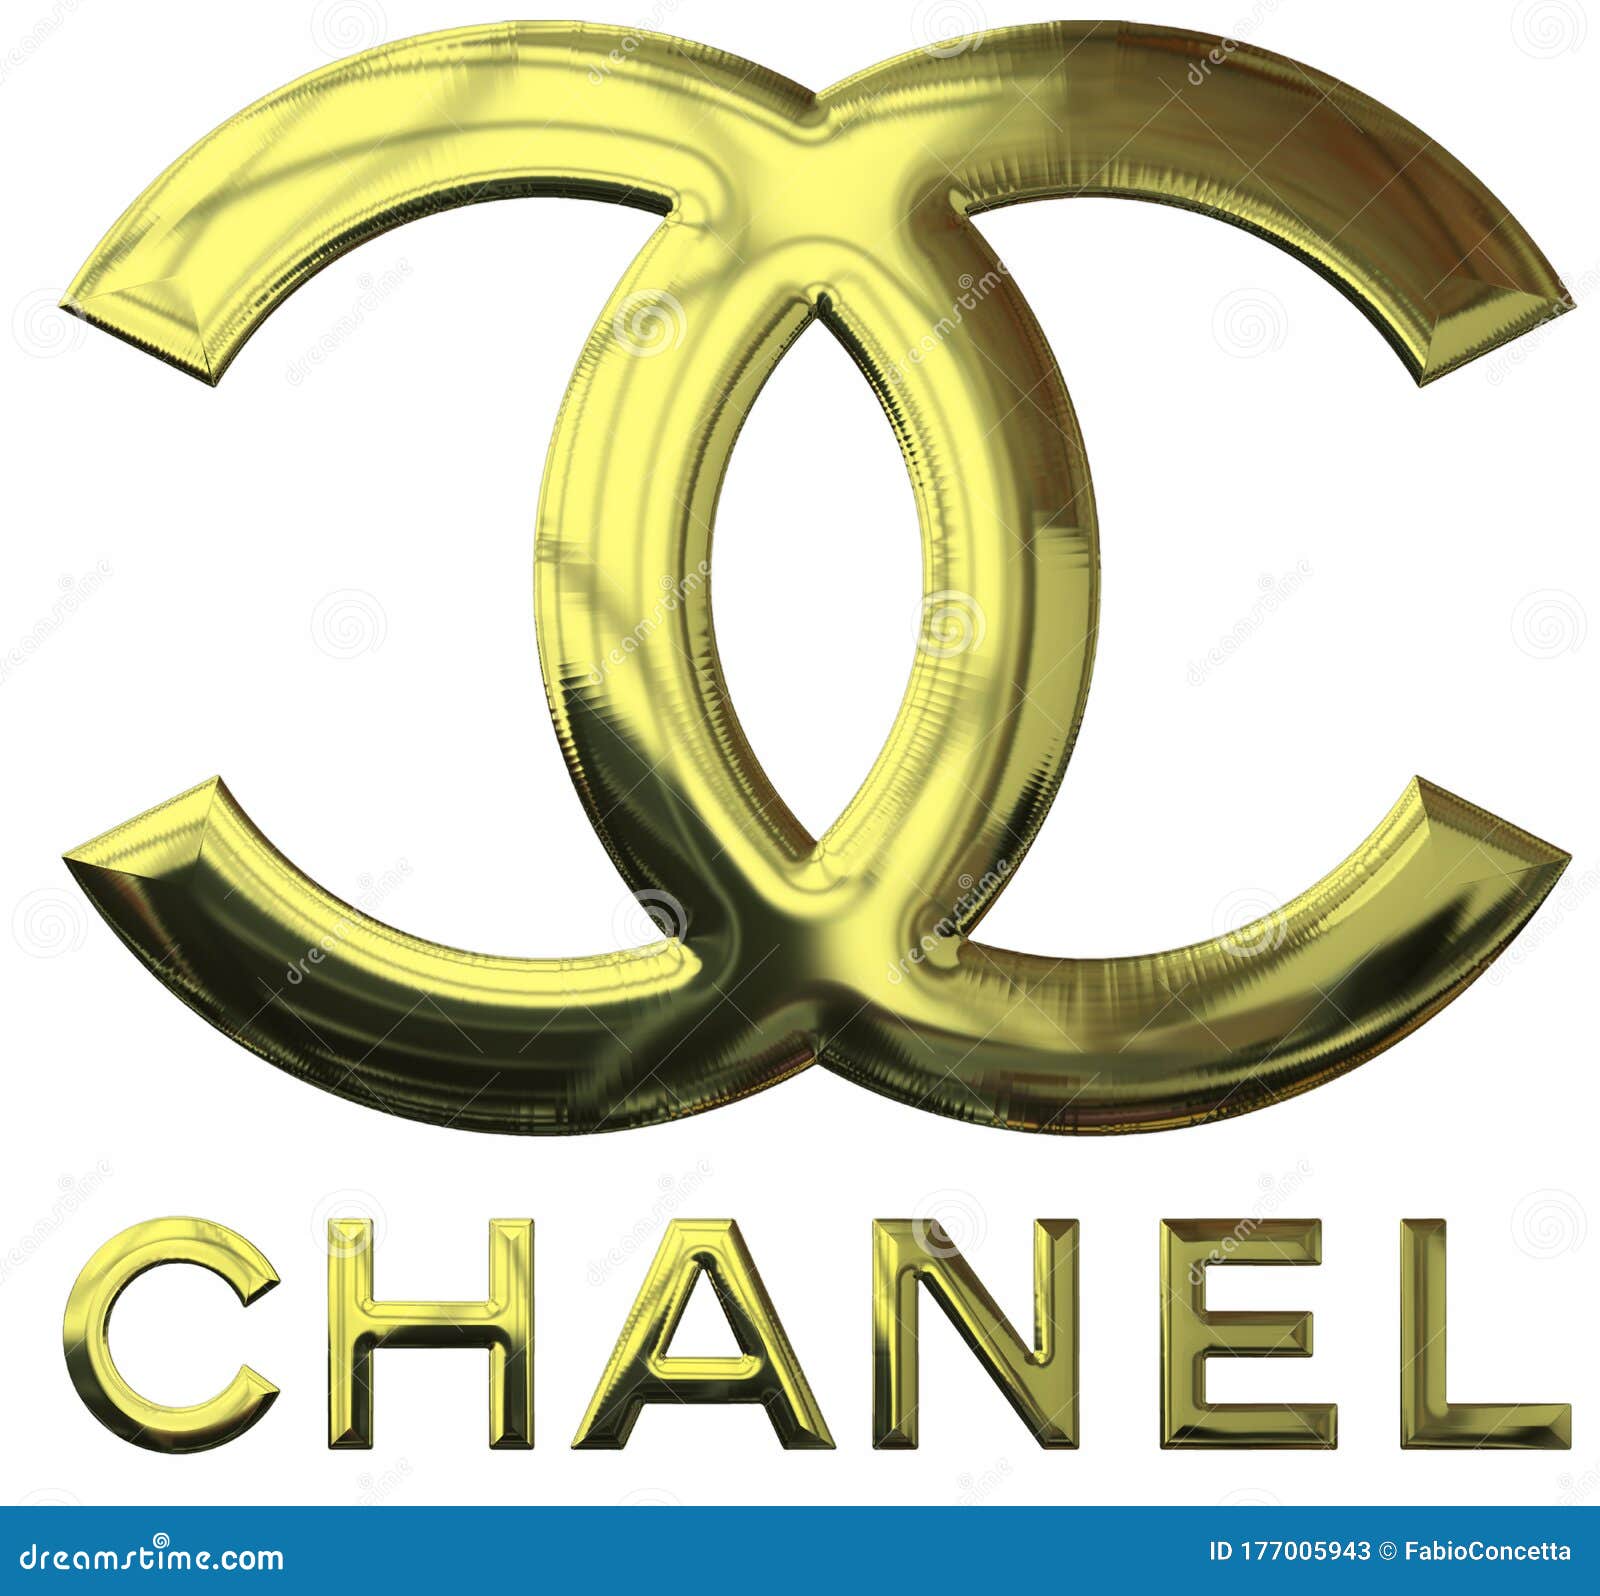 Top 62 về chanel logo meaning  cdgdbentreeduvn